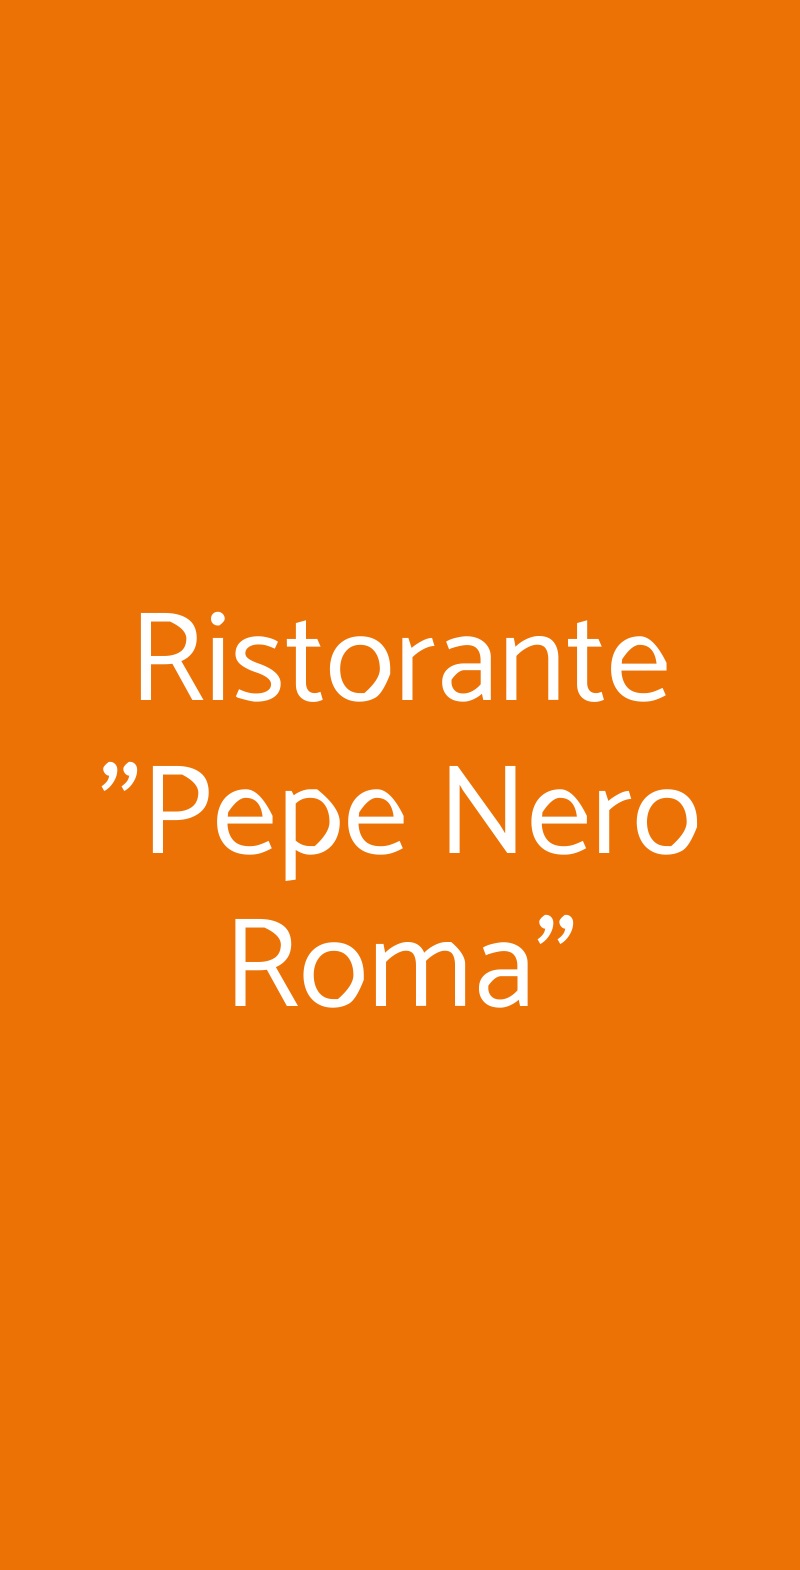 Ristorante "Pepe Nero Roma" Roma menù 1 pagina